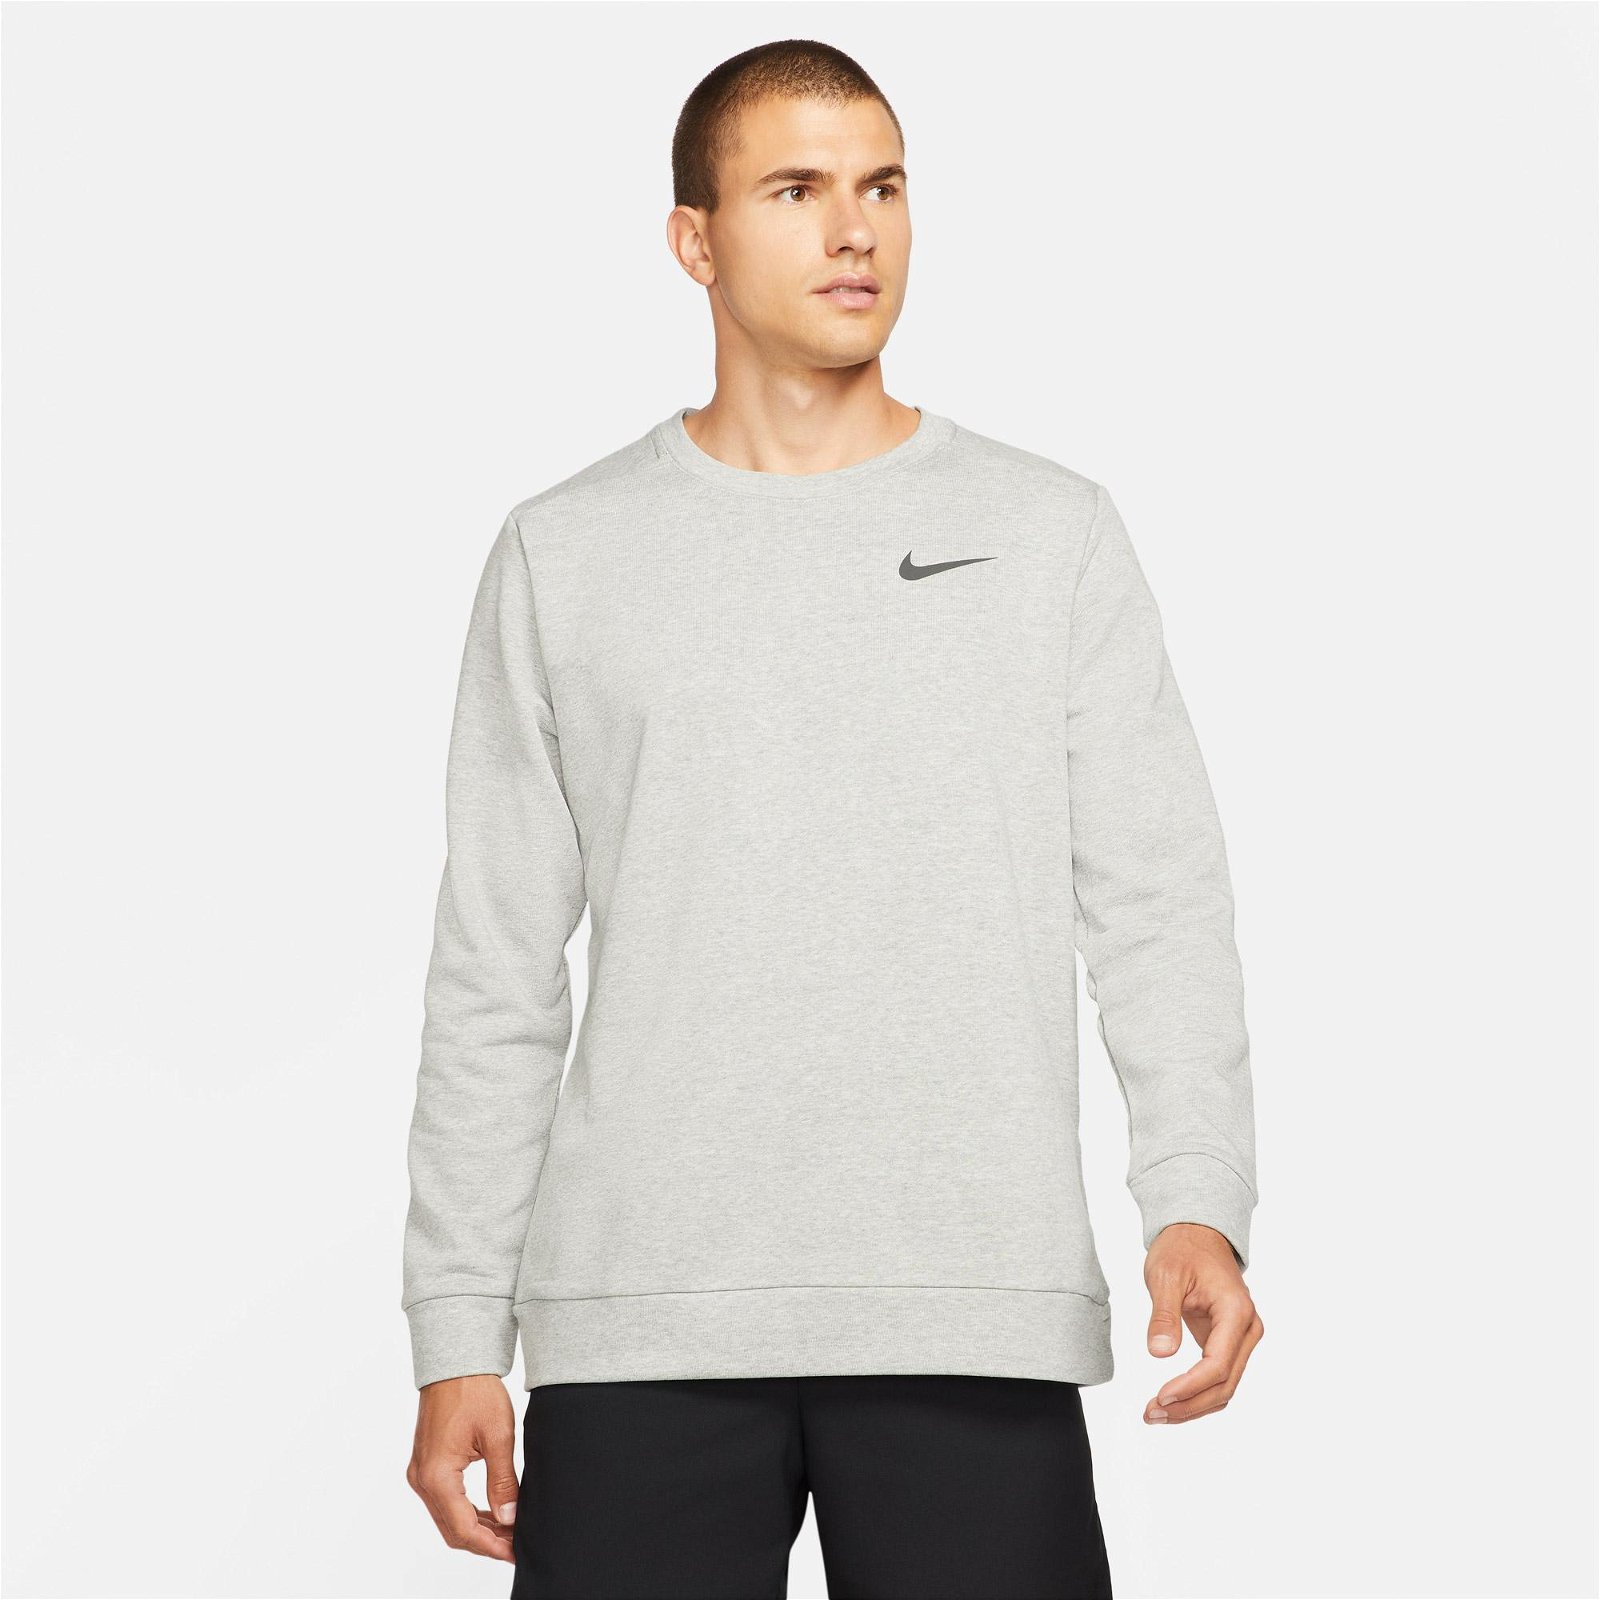 Nike Dri-FITCrw Erkek Gri Sweatshirt